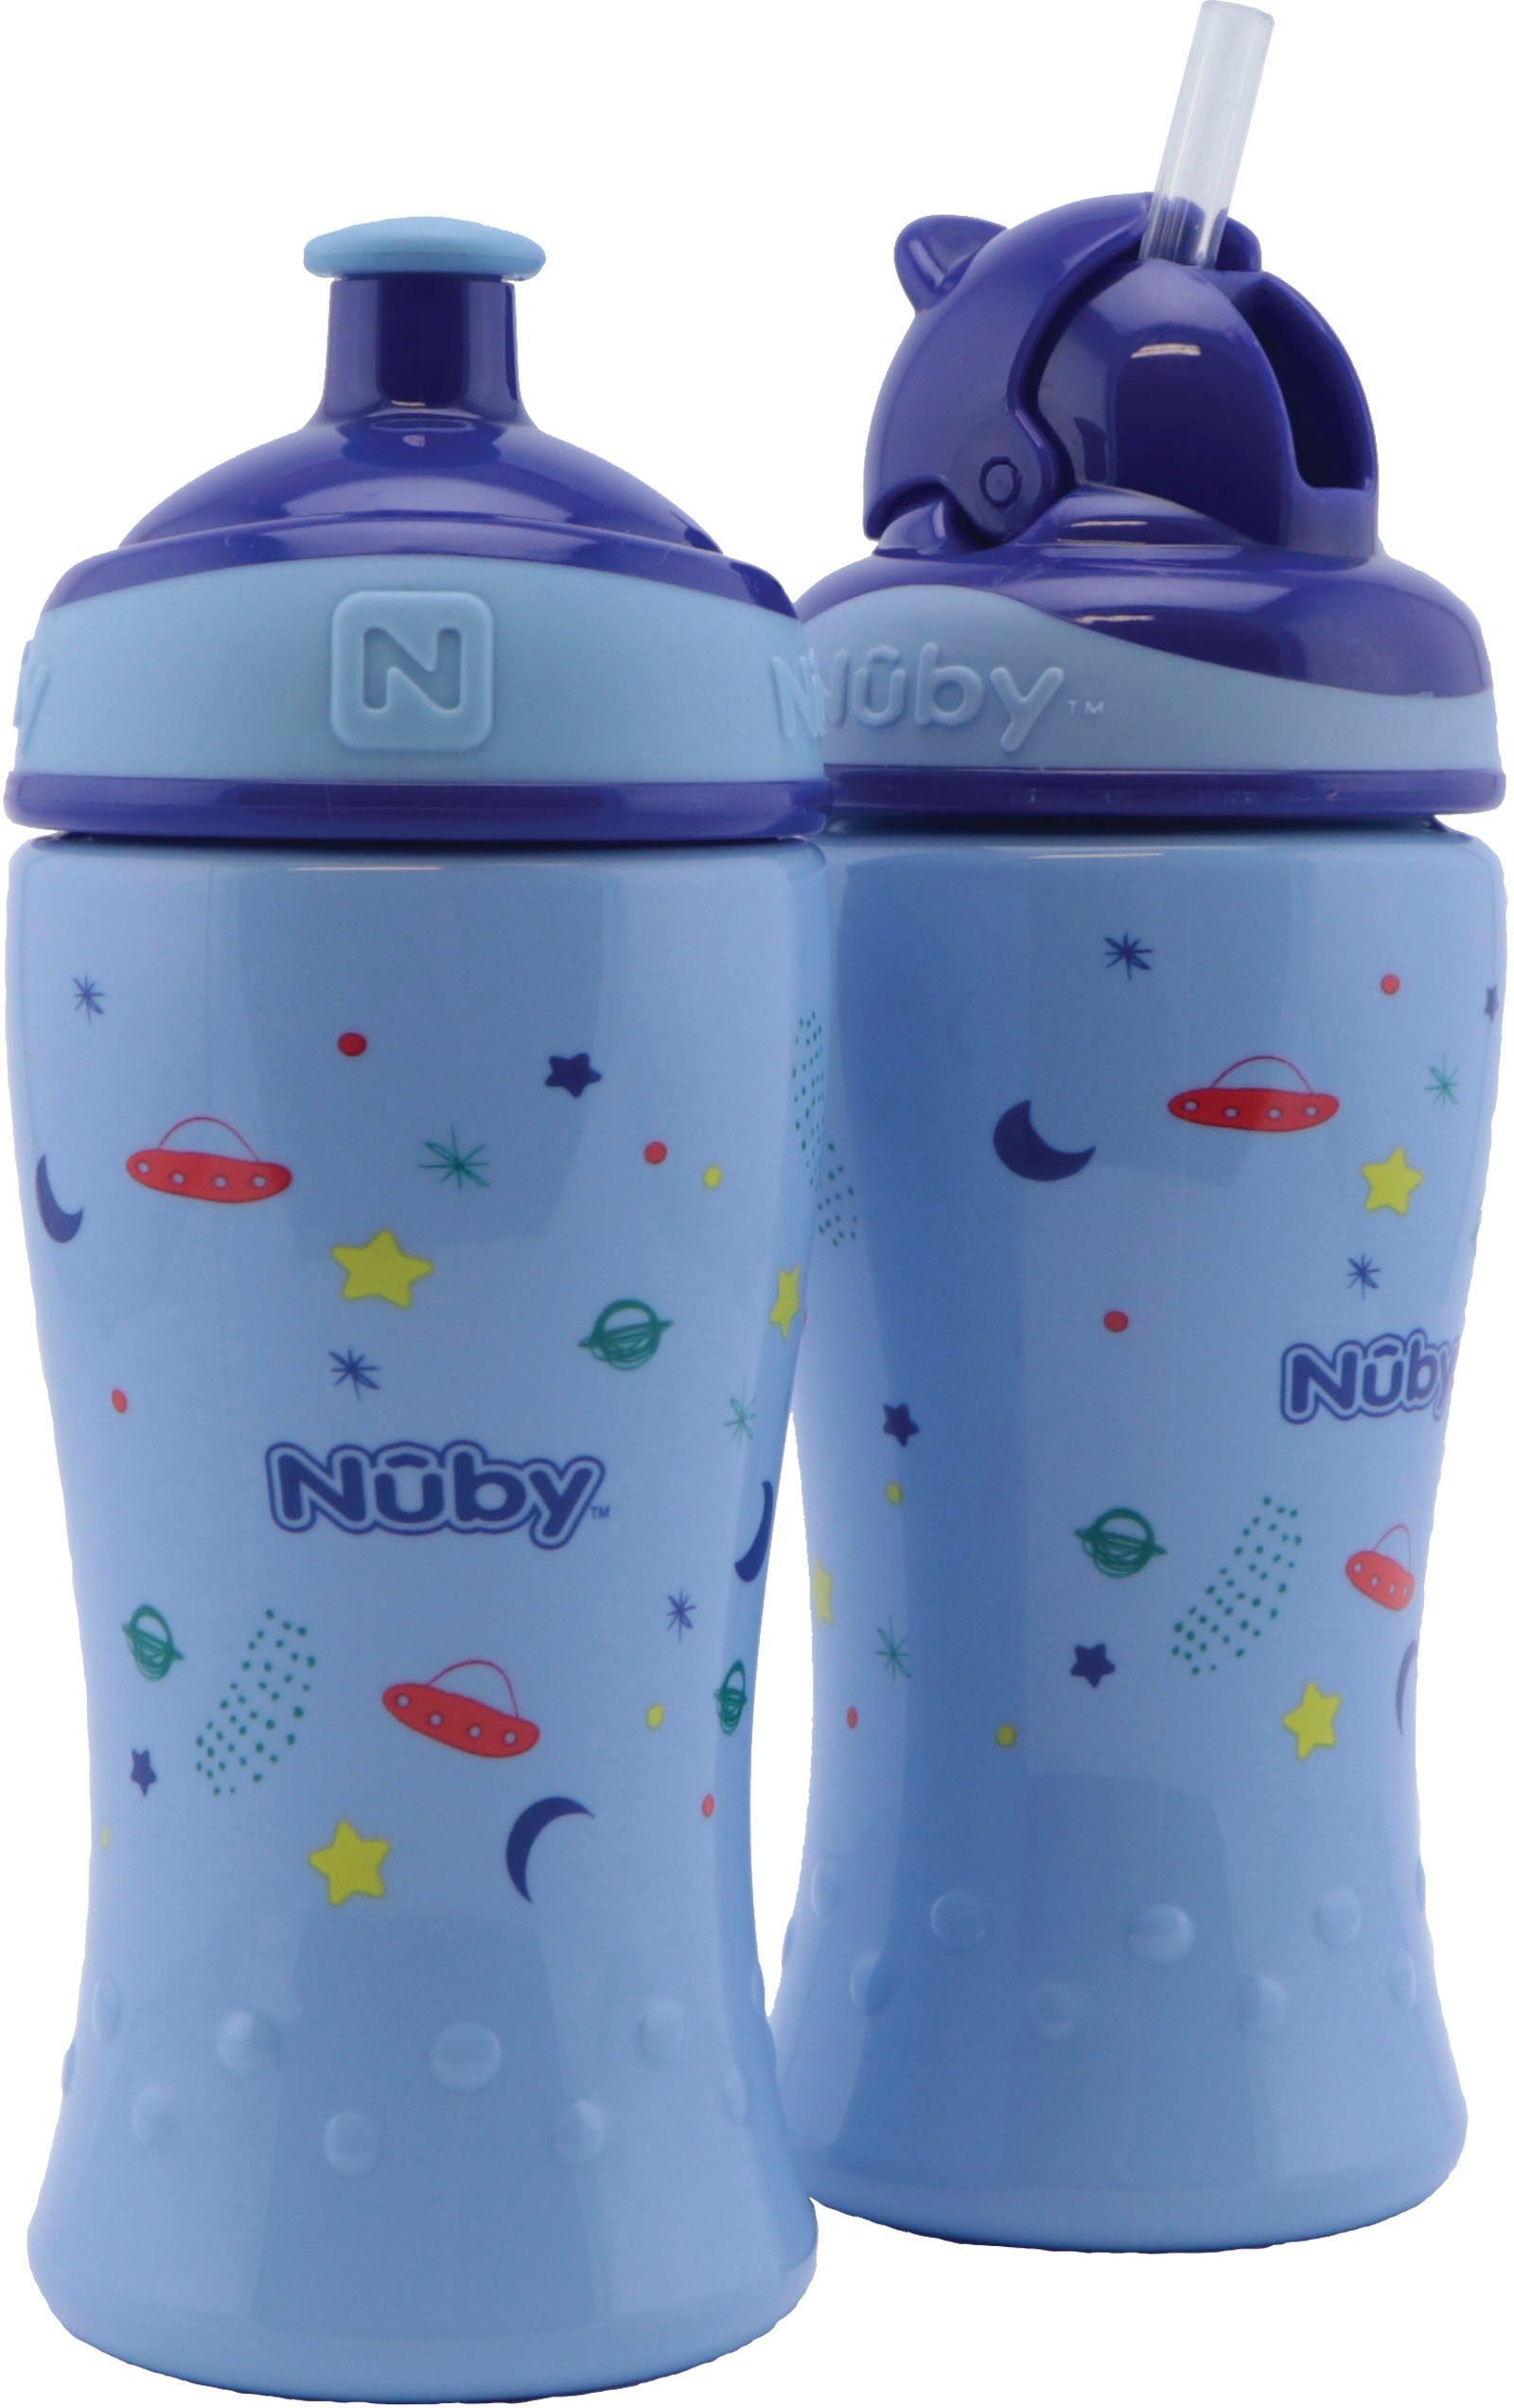 Nuby Trinkflasche blau